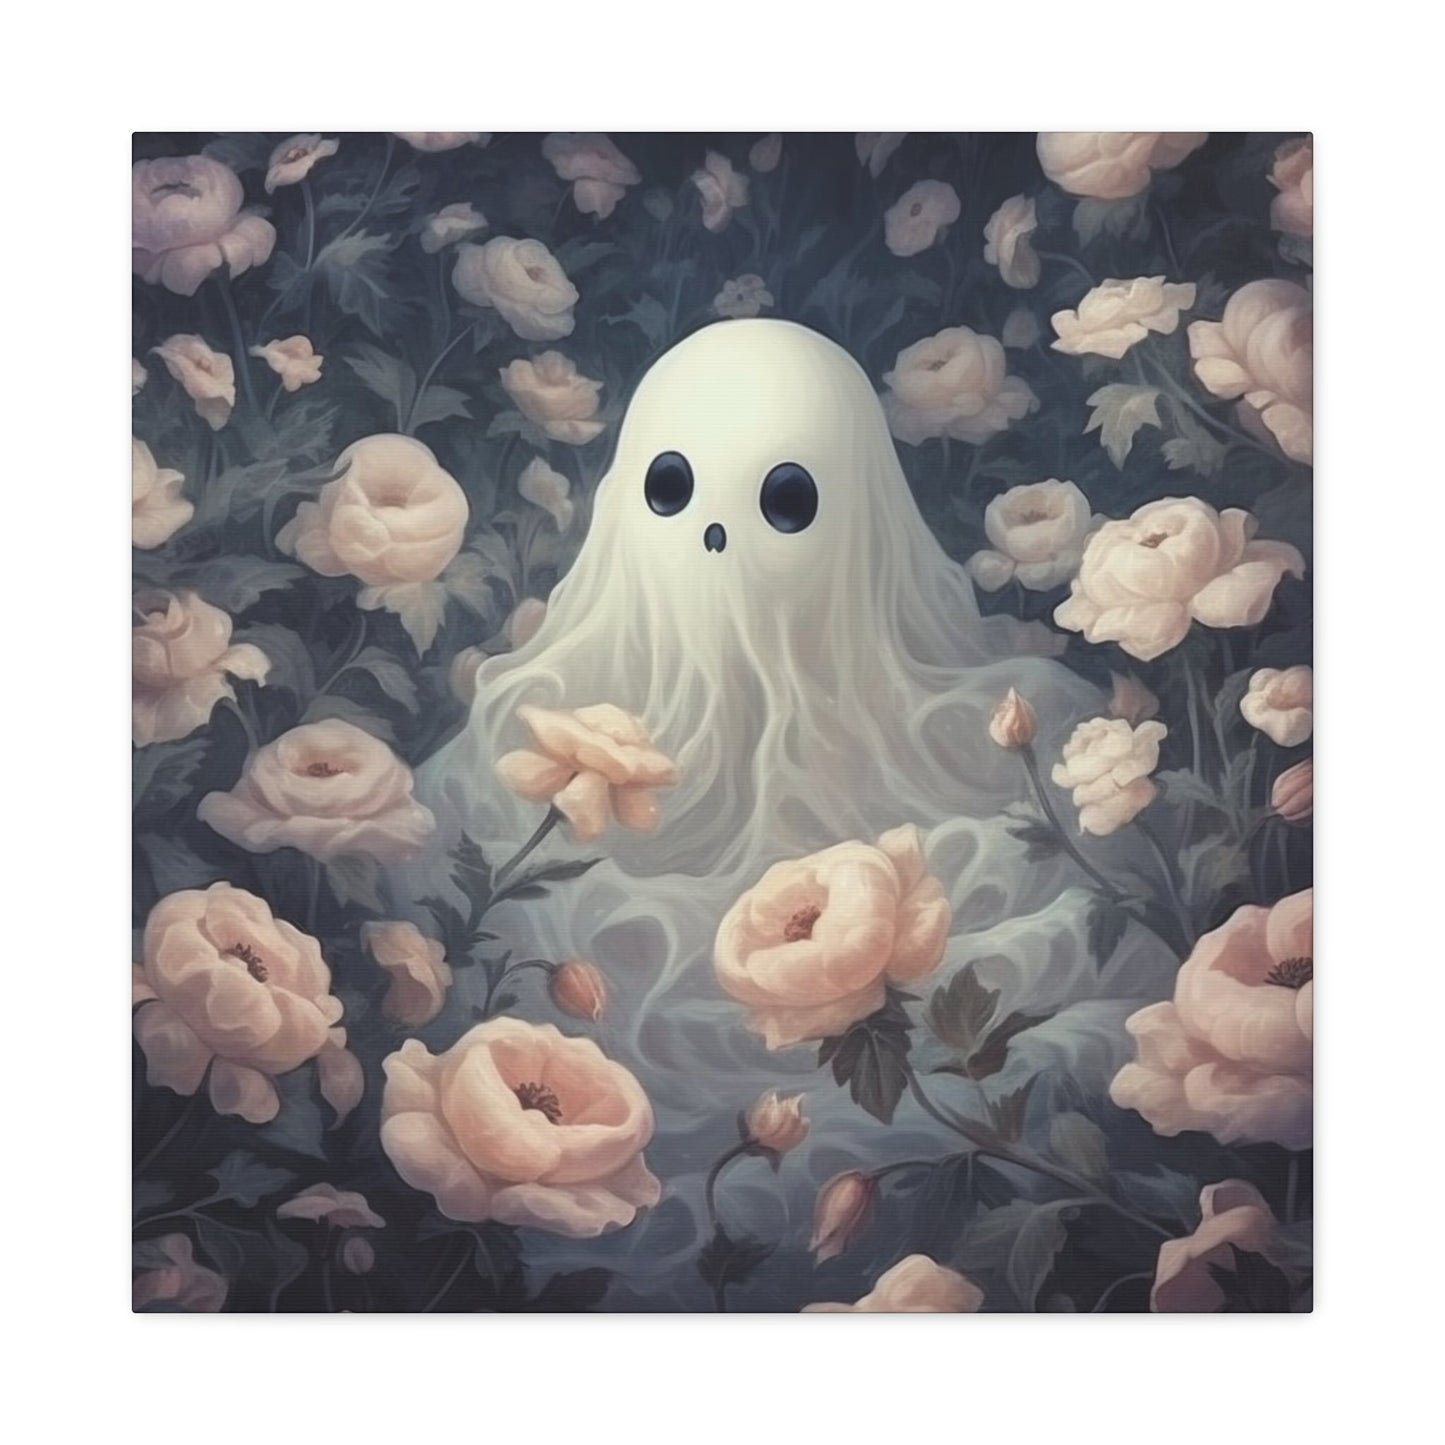 Cute Ghost in Rose Garden Canvas Gallery WrapCanvasVTZdesigns24″ x 24″1.25"Art & Wall DecorCanvasFall Picks